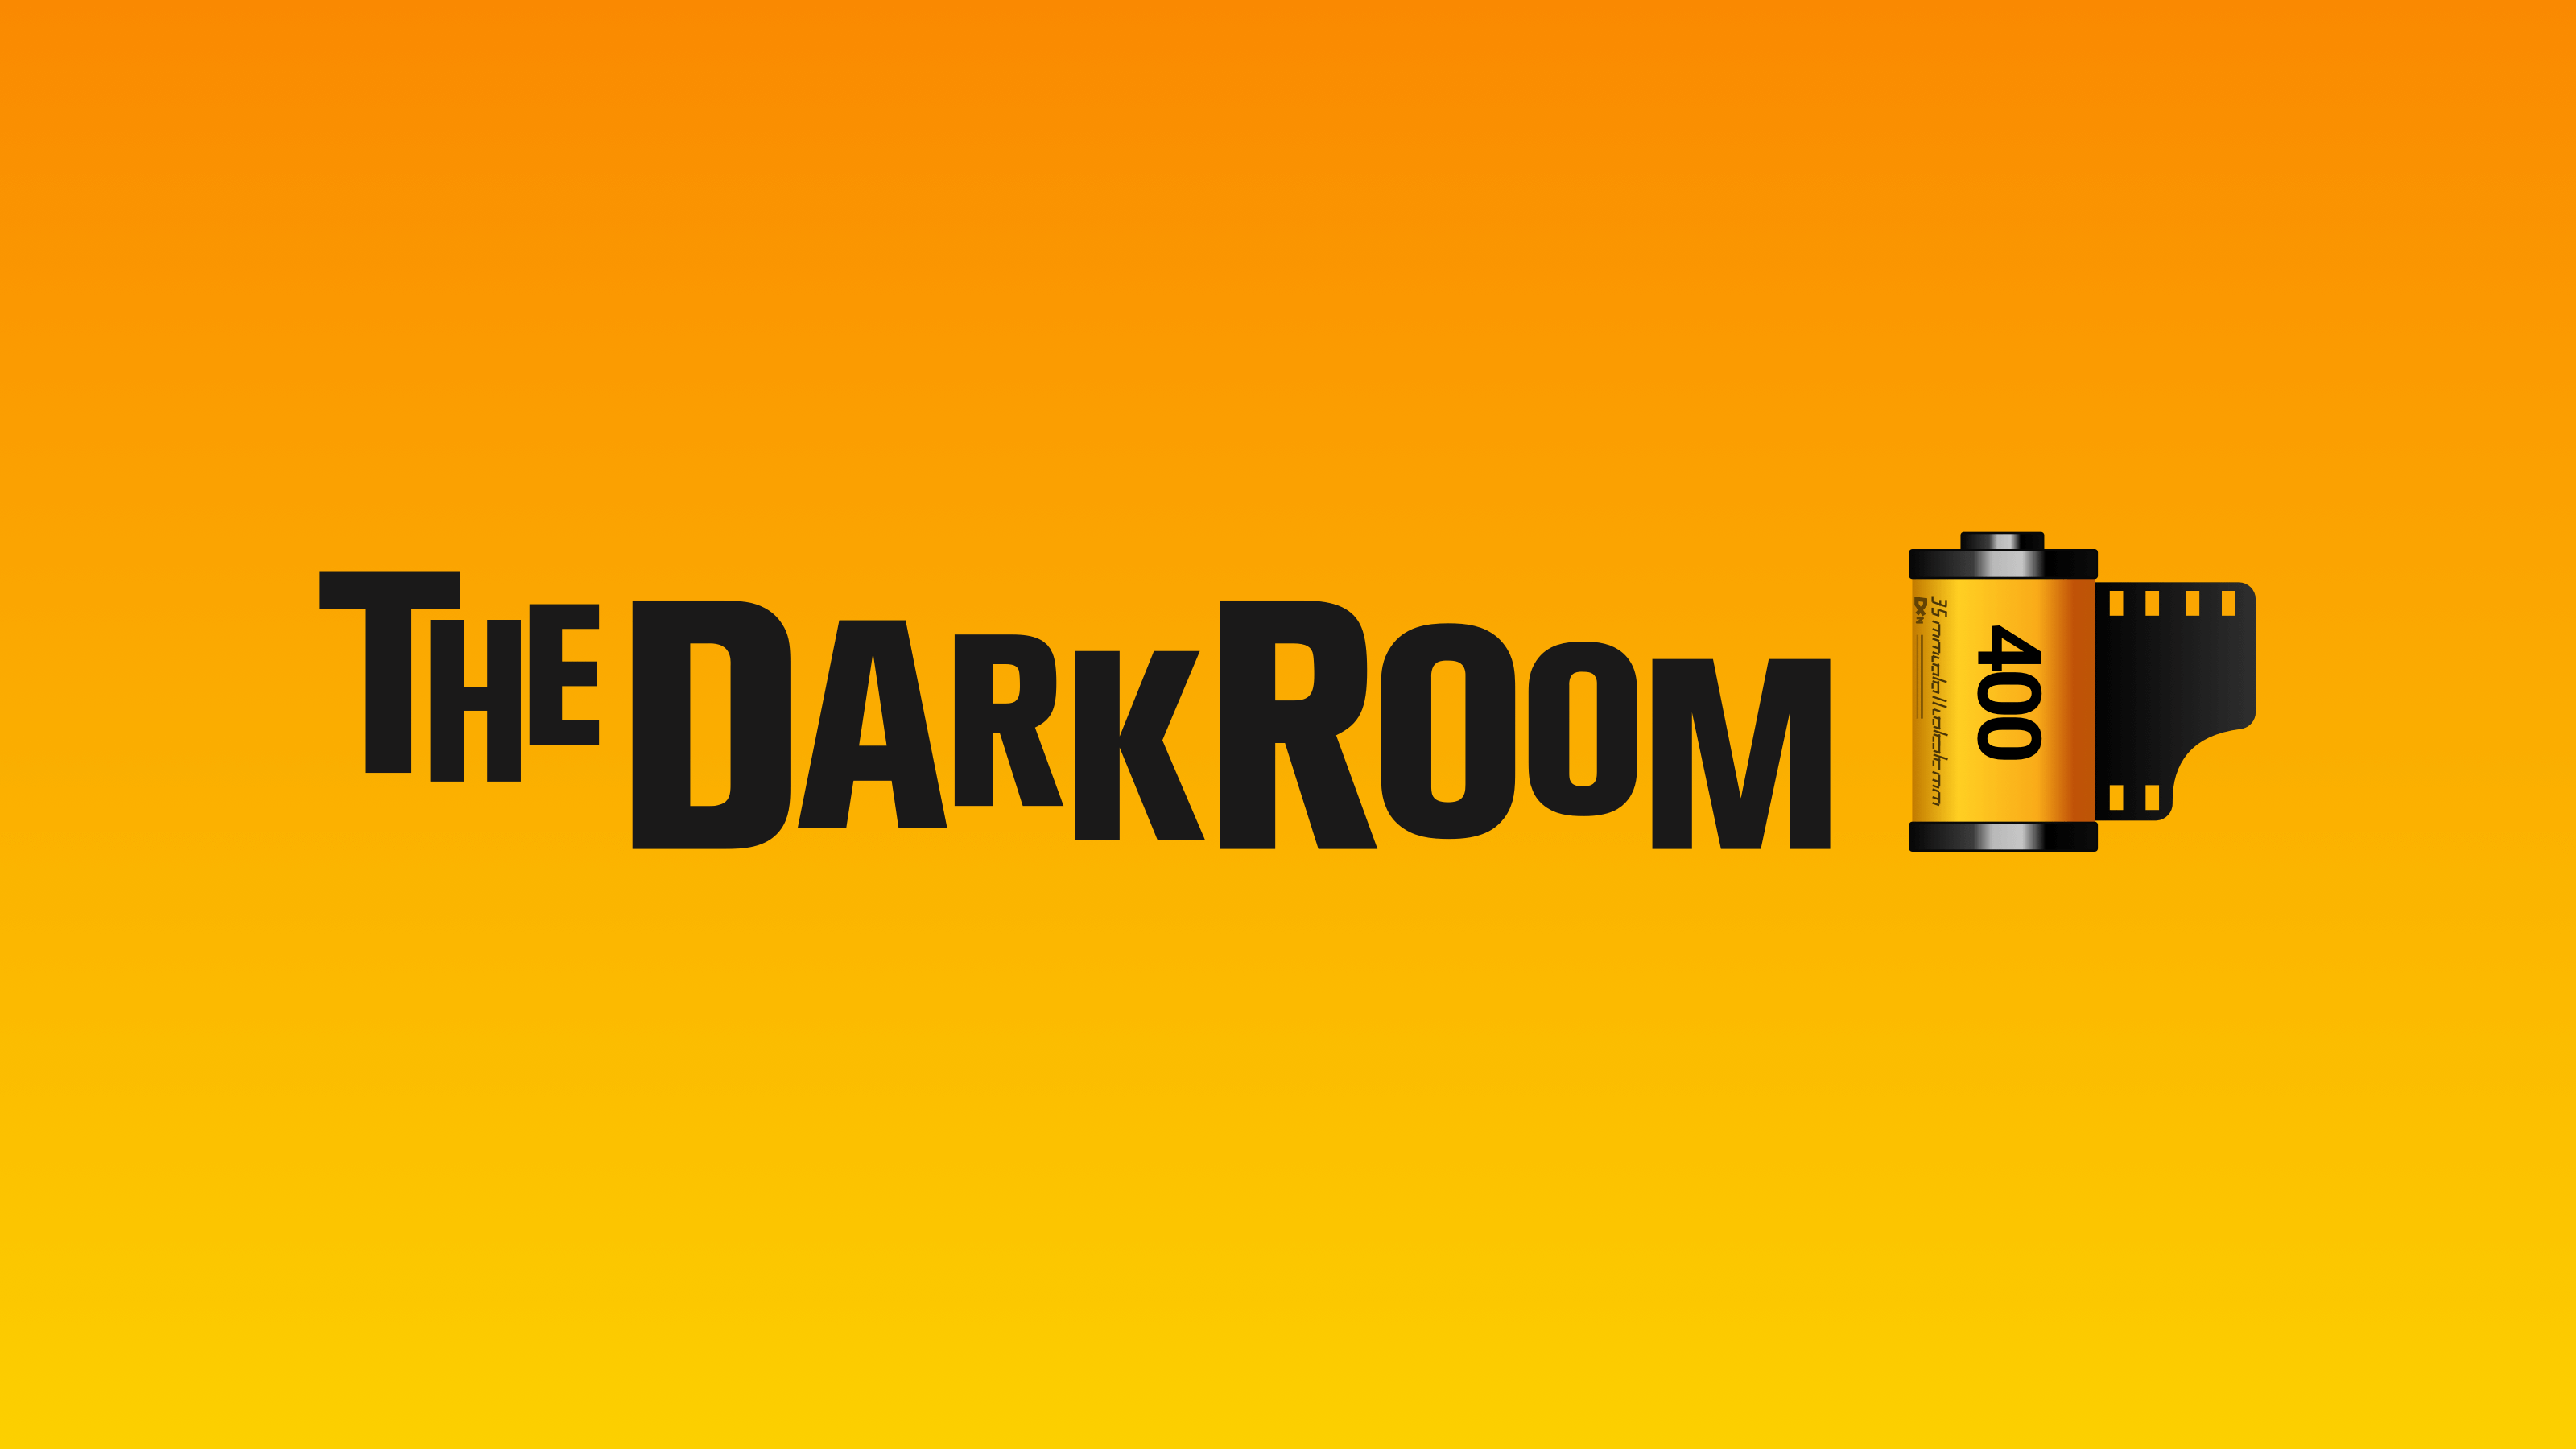 35mm Film Format – 135 Film - The Darkroom Photo Lab